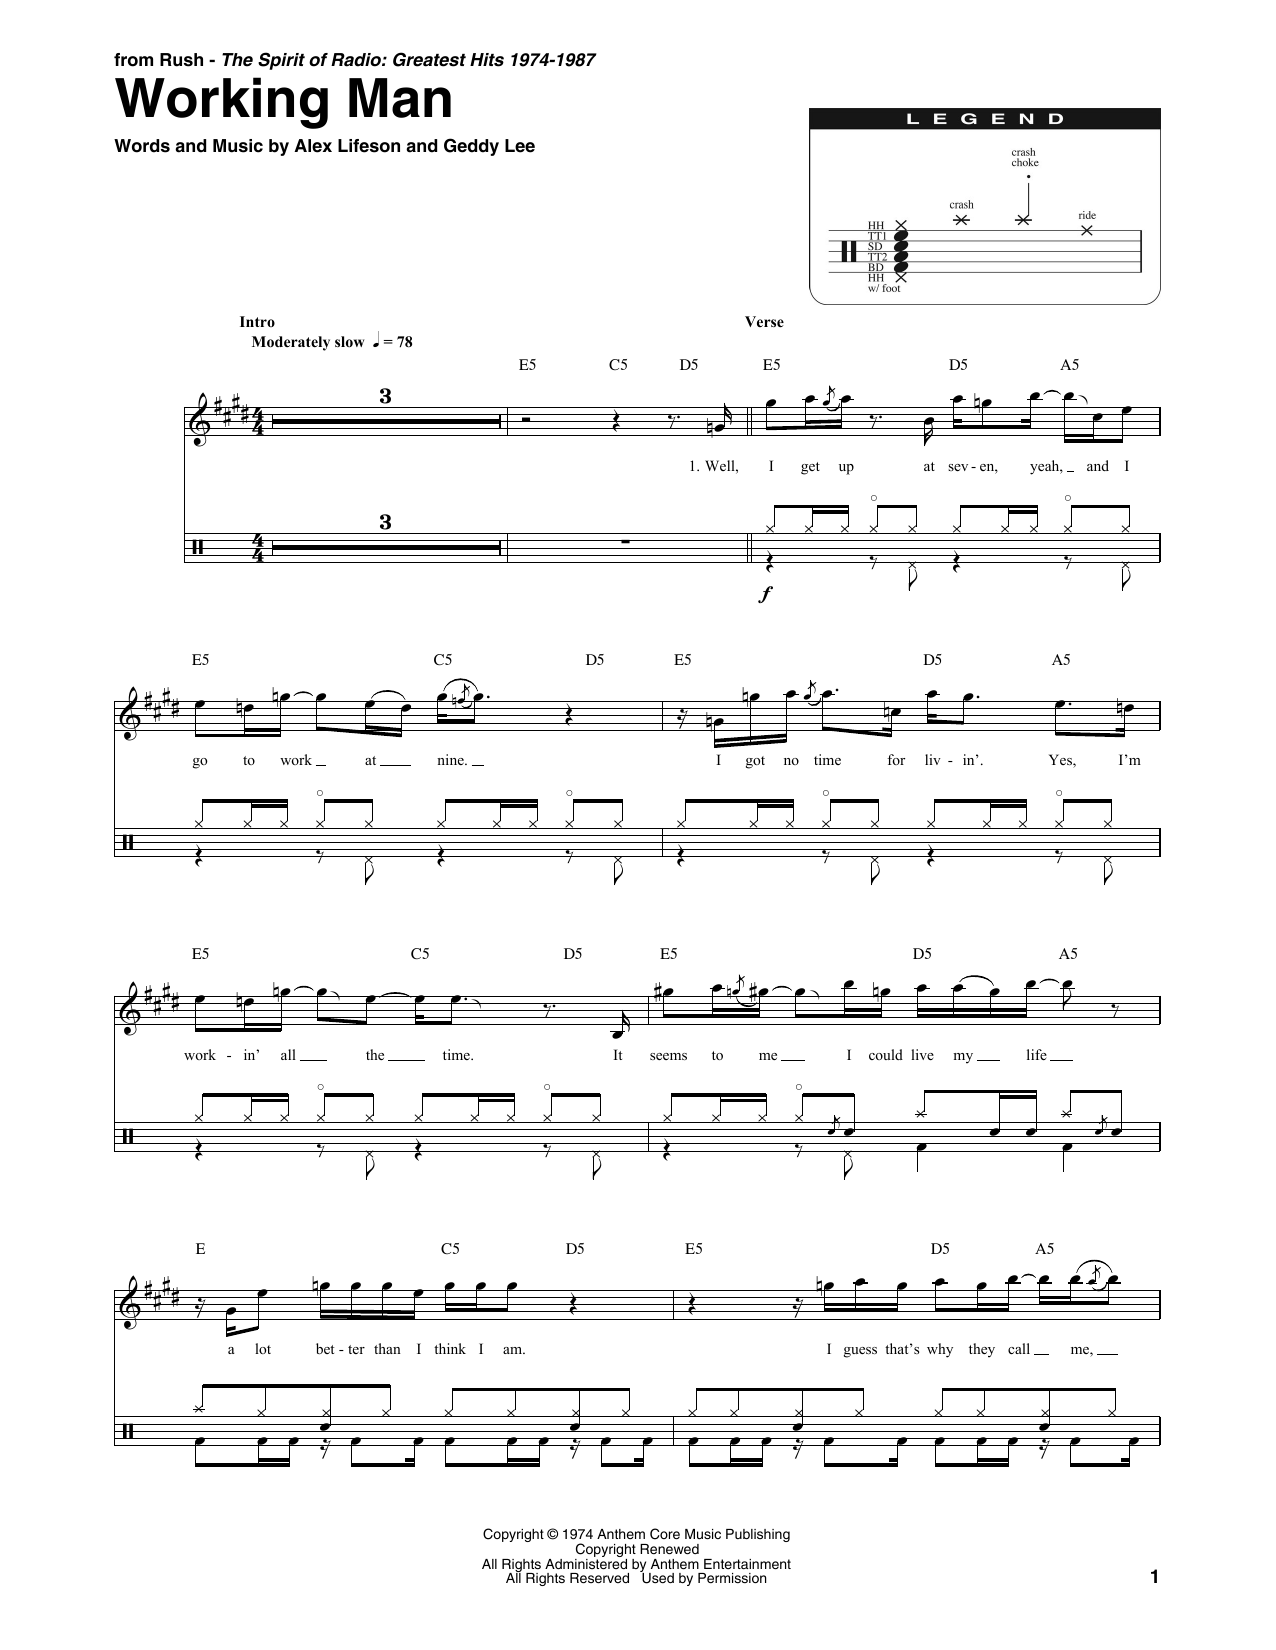 Rush Working Man Sheet Music Notes & Chords for Bass Guitar Tab - Download or Print PDF